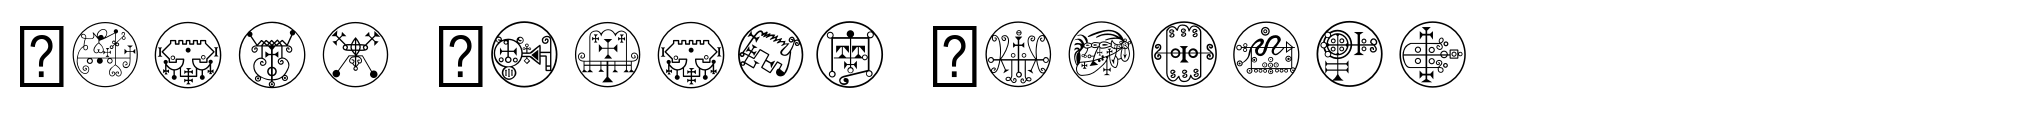 White Magick Symbols image